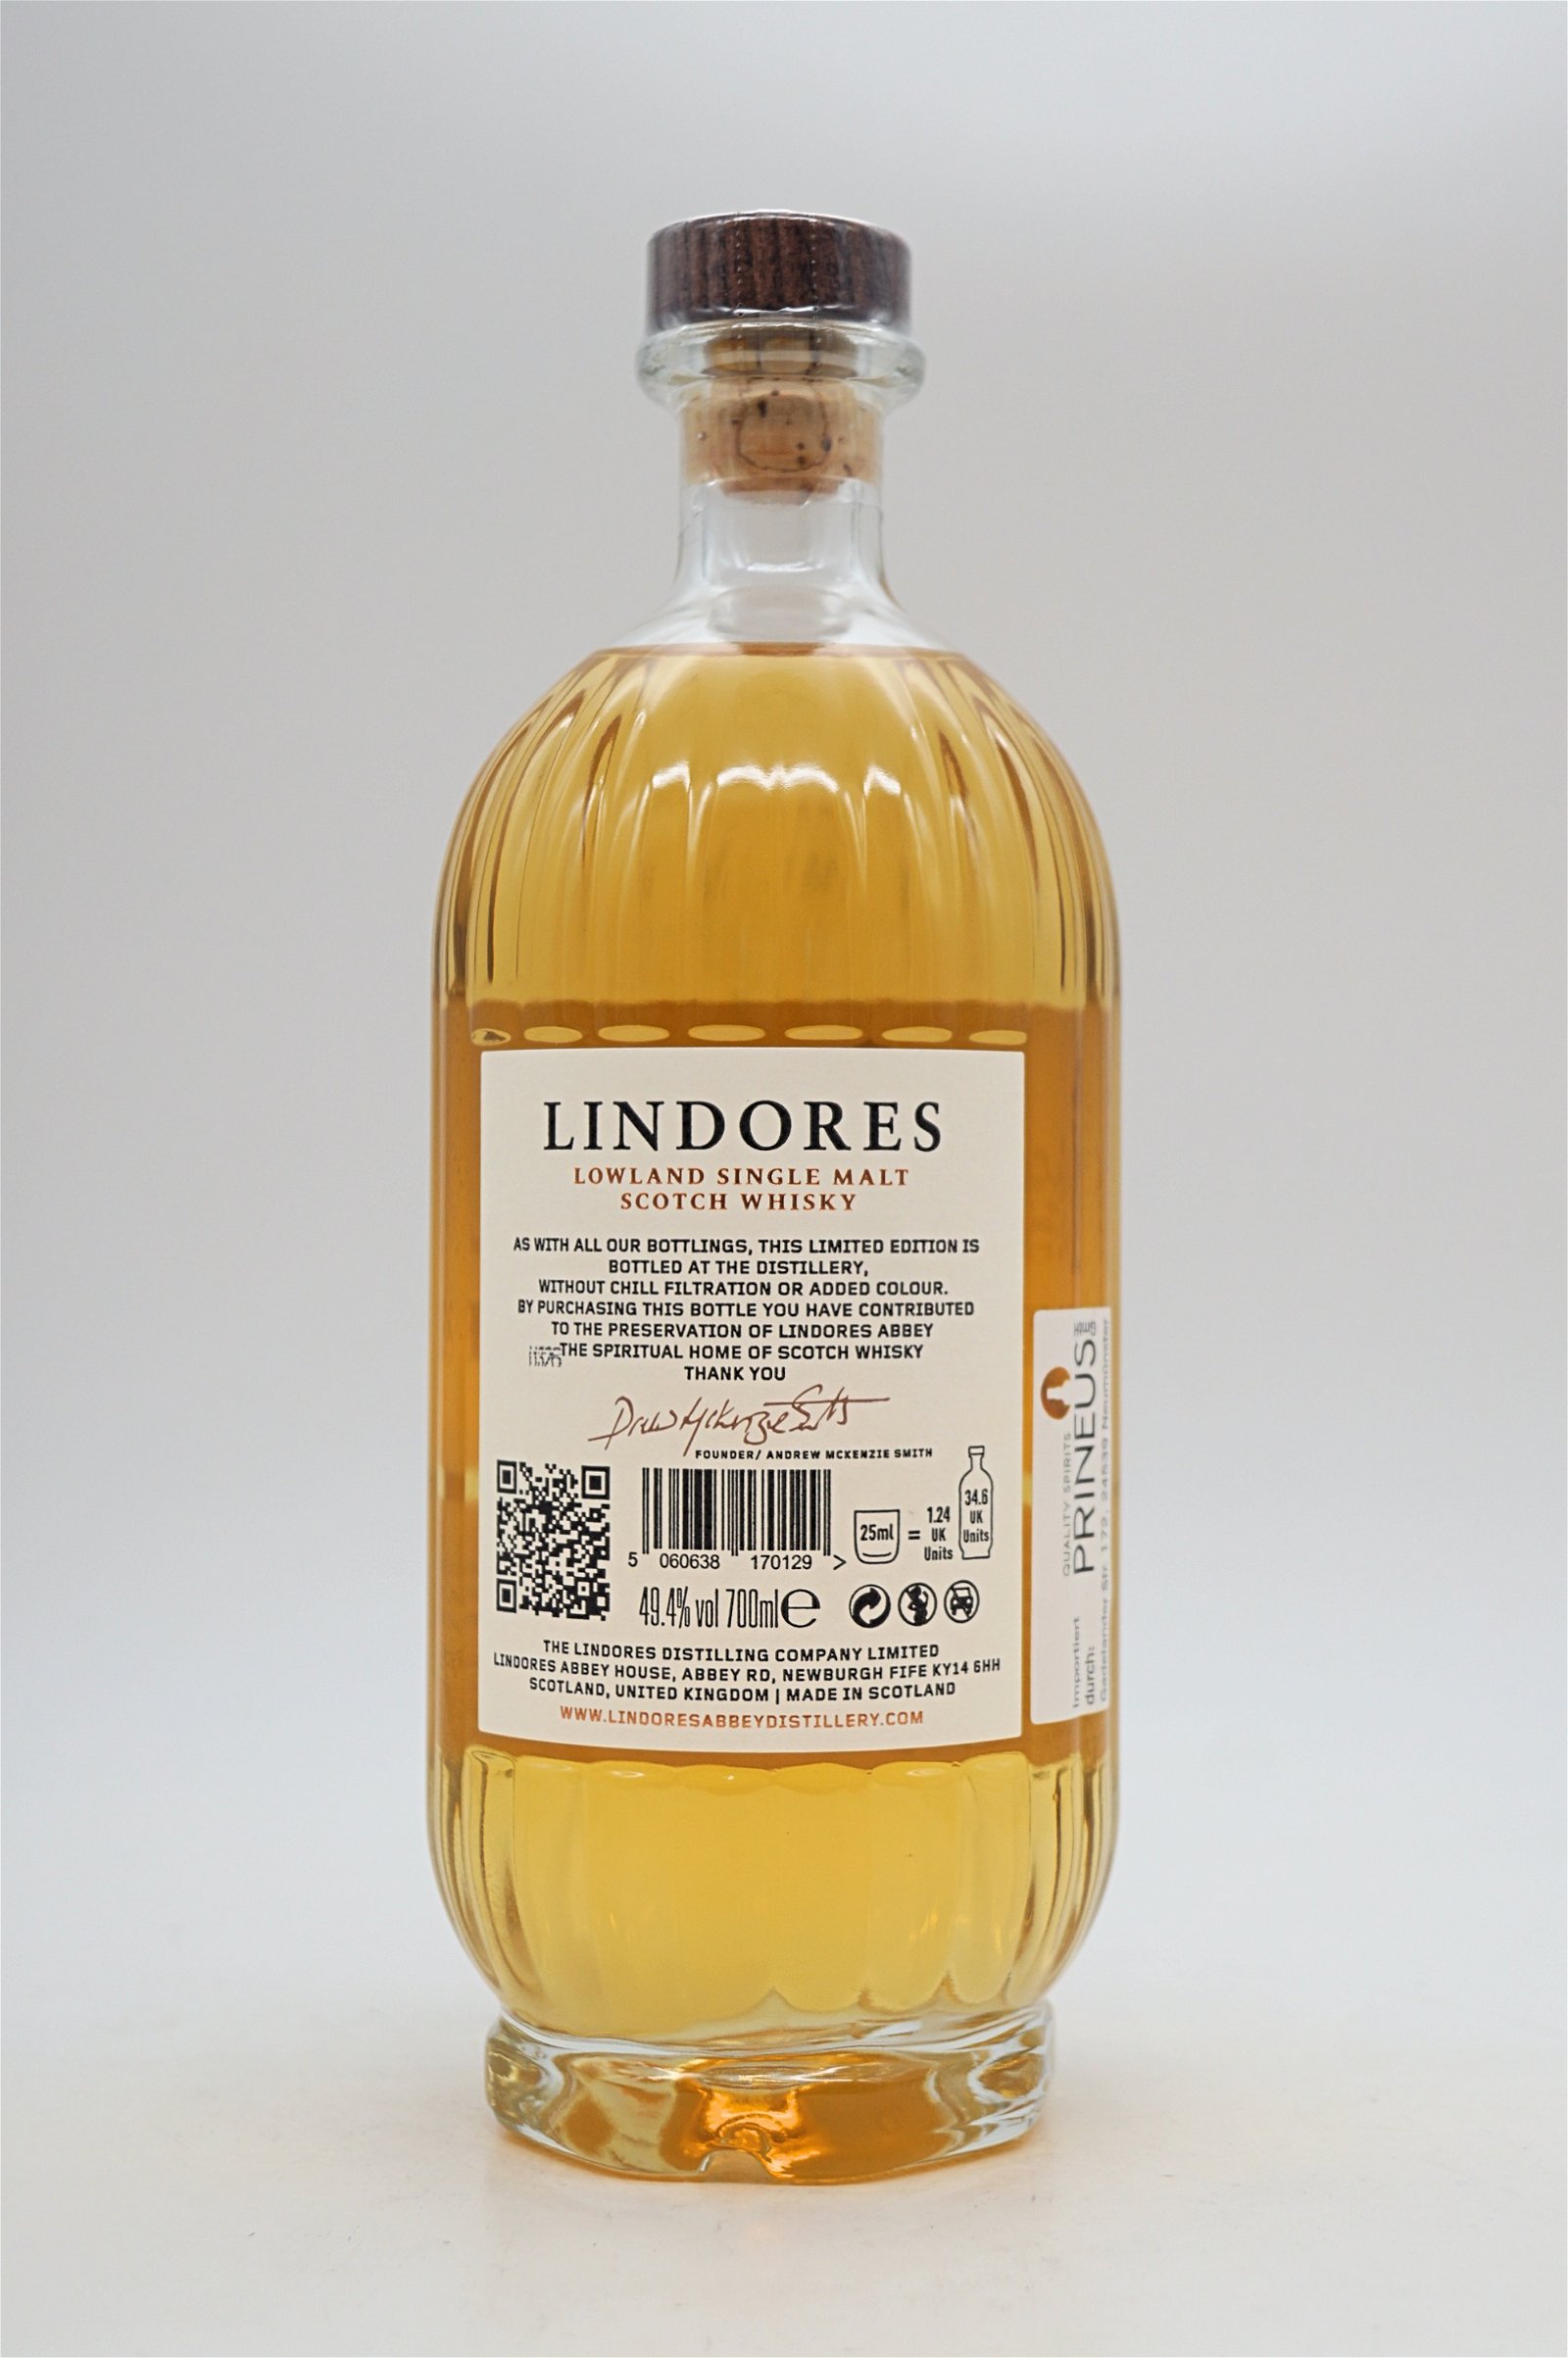 Lindores Abbey Distillery Cask of Lindores Bourbon